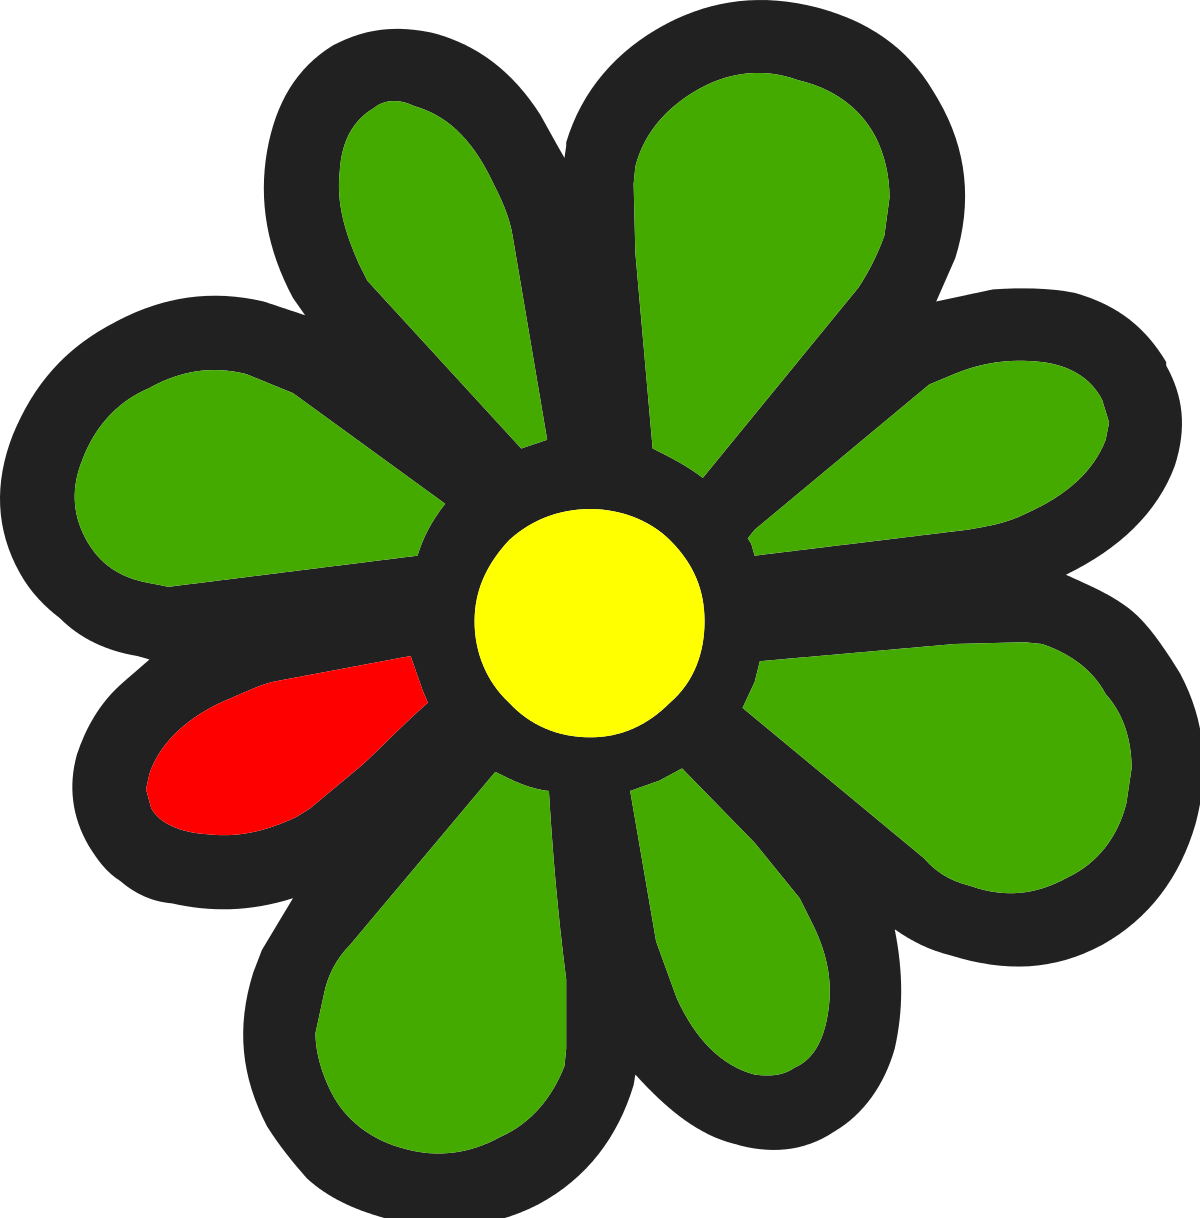 ICQ Logo - ICQ logo PNG images free download